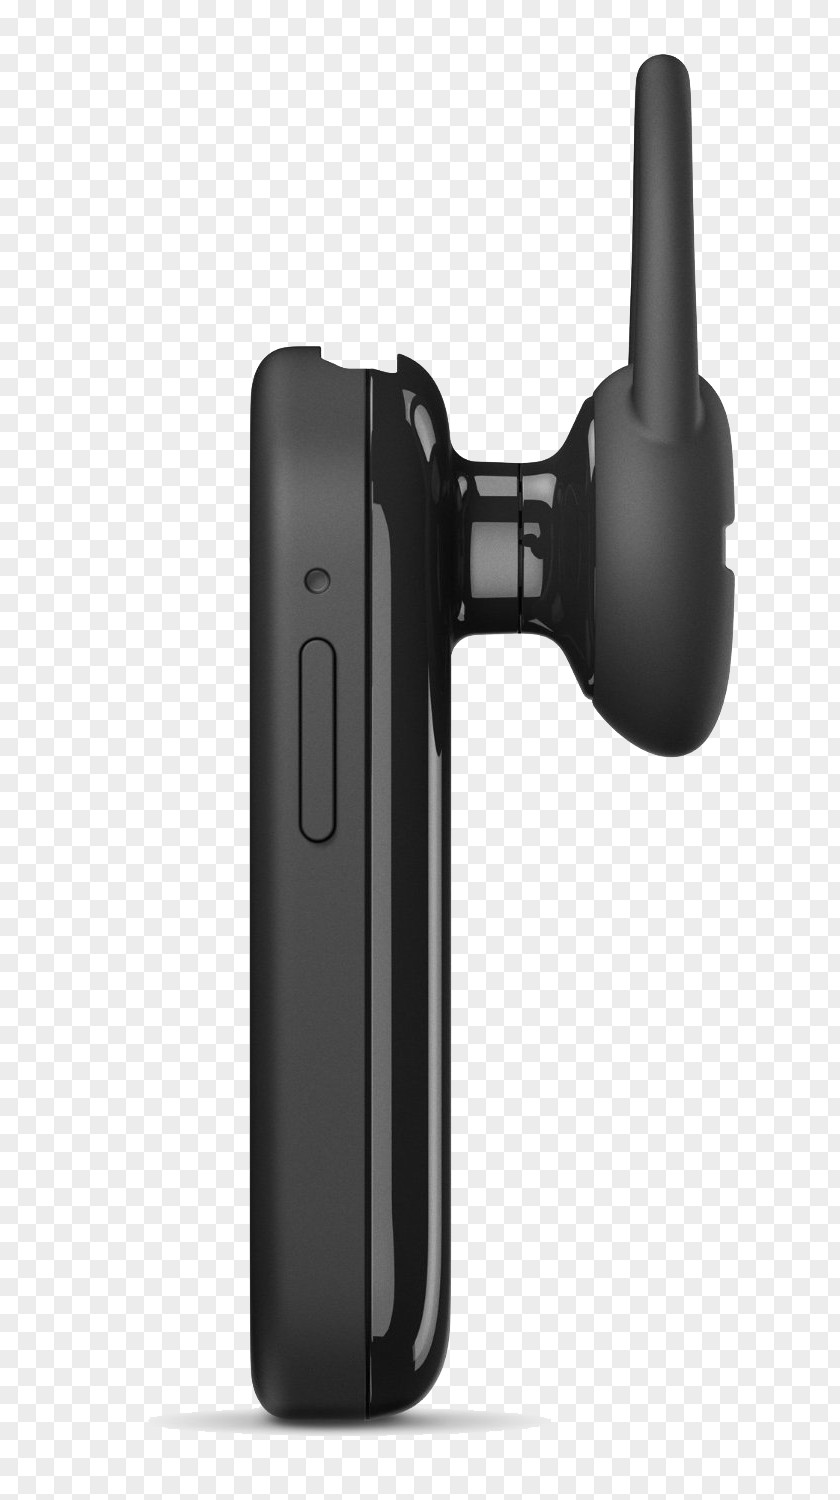 Sony Bluetooth Headset Microphone Headphones Wireless PNG